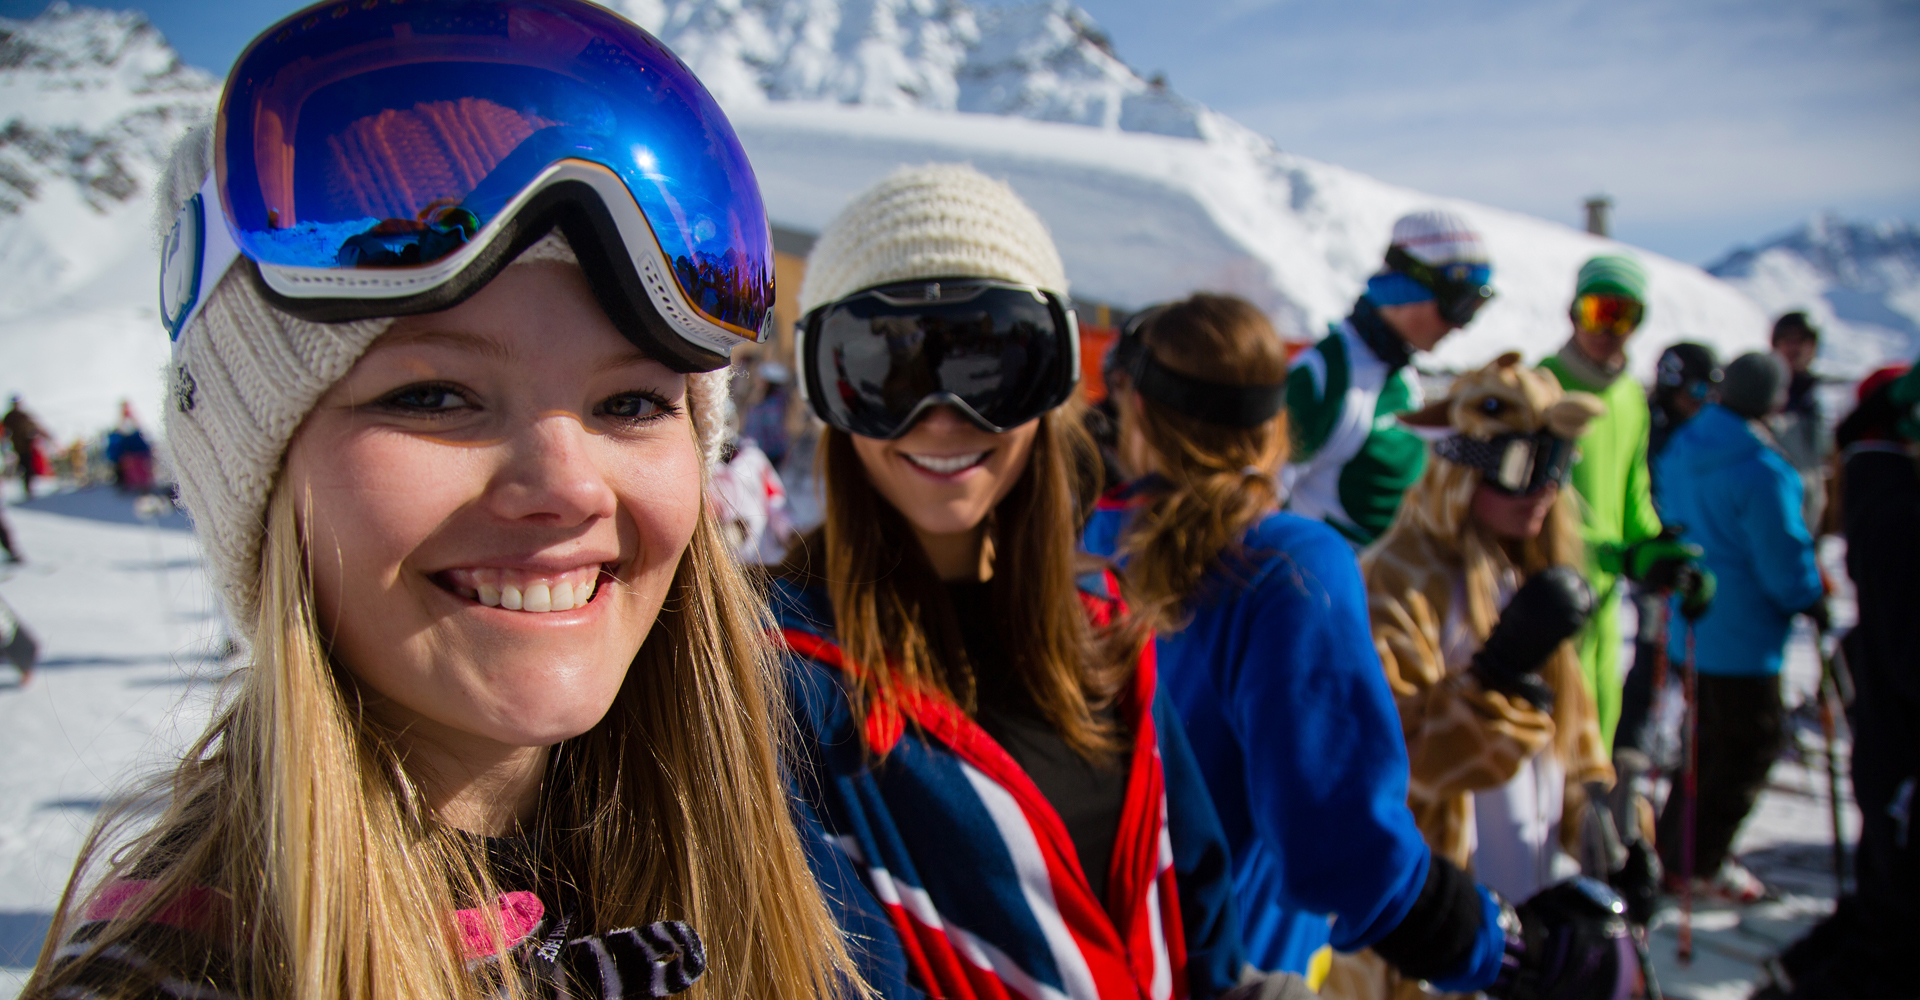 Why choose a Gap Ski Instructor Course?